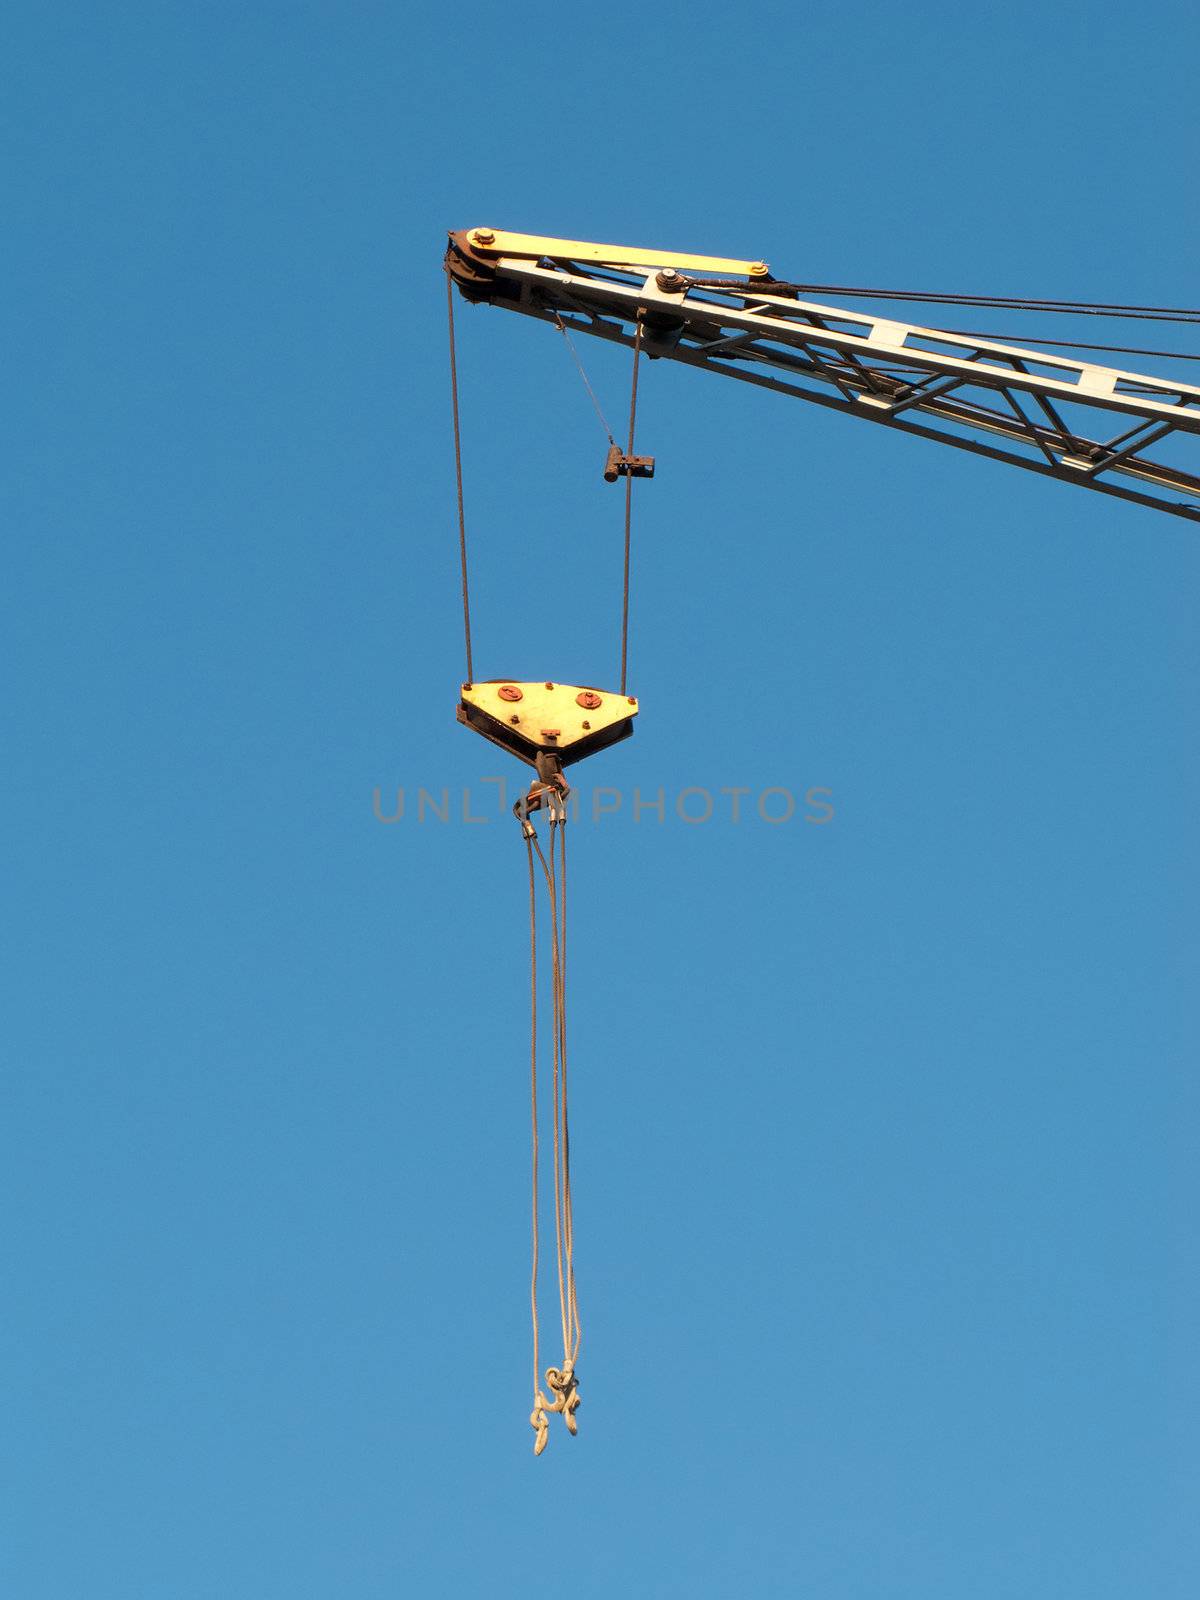 Building crane by ia_64